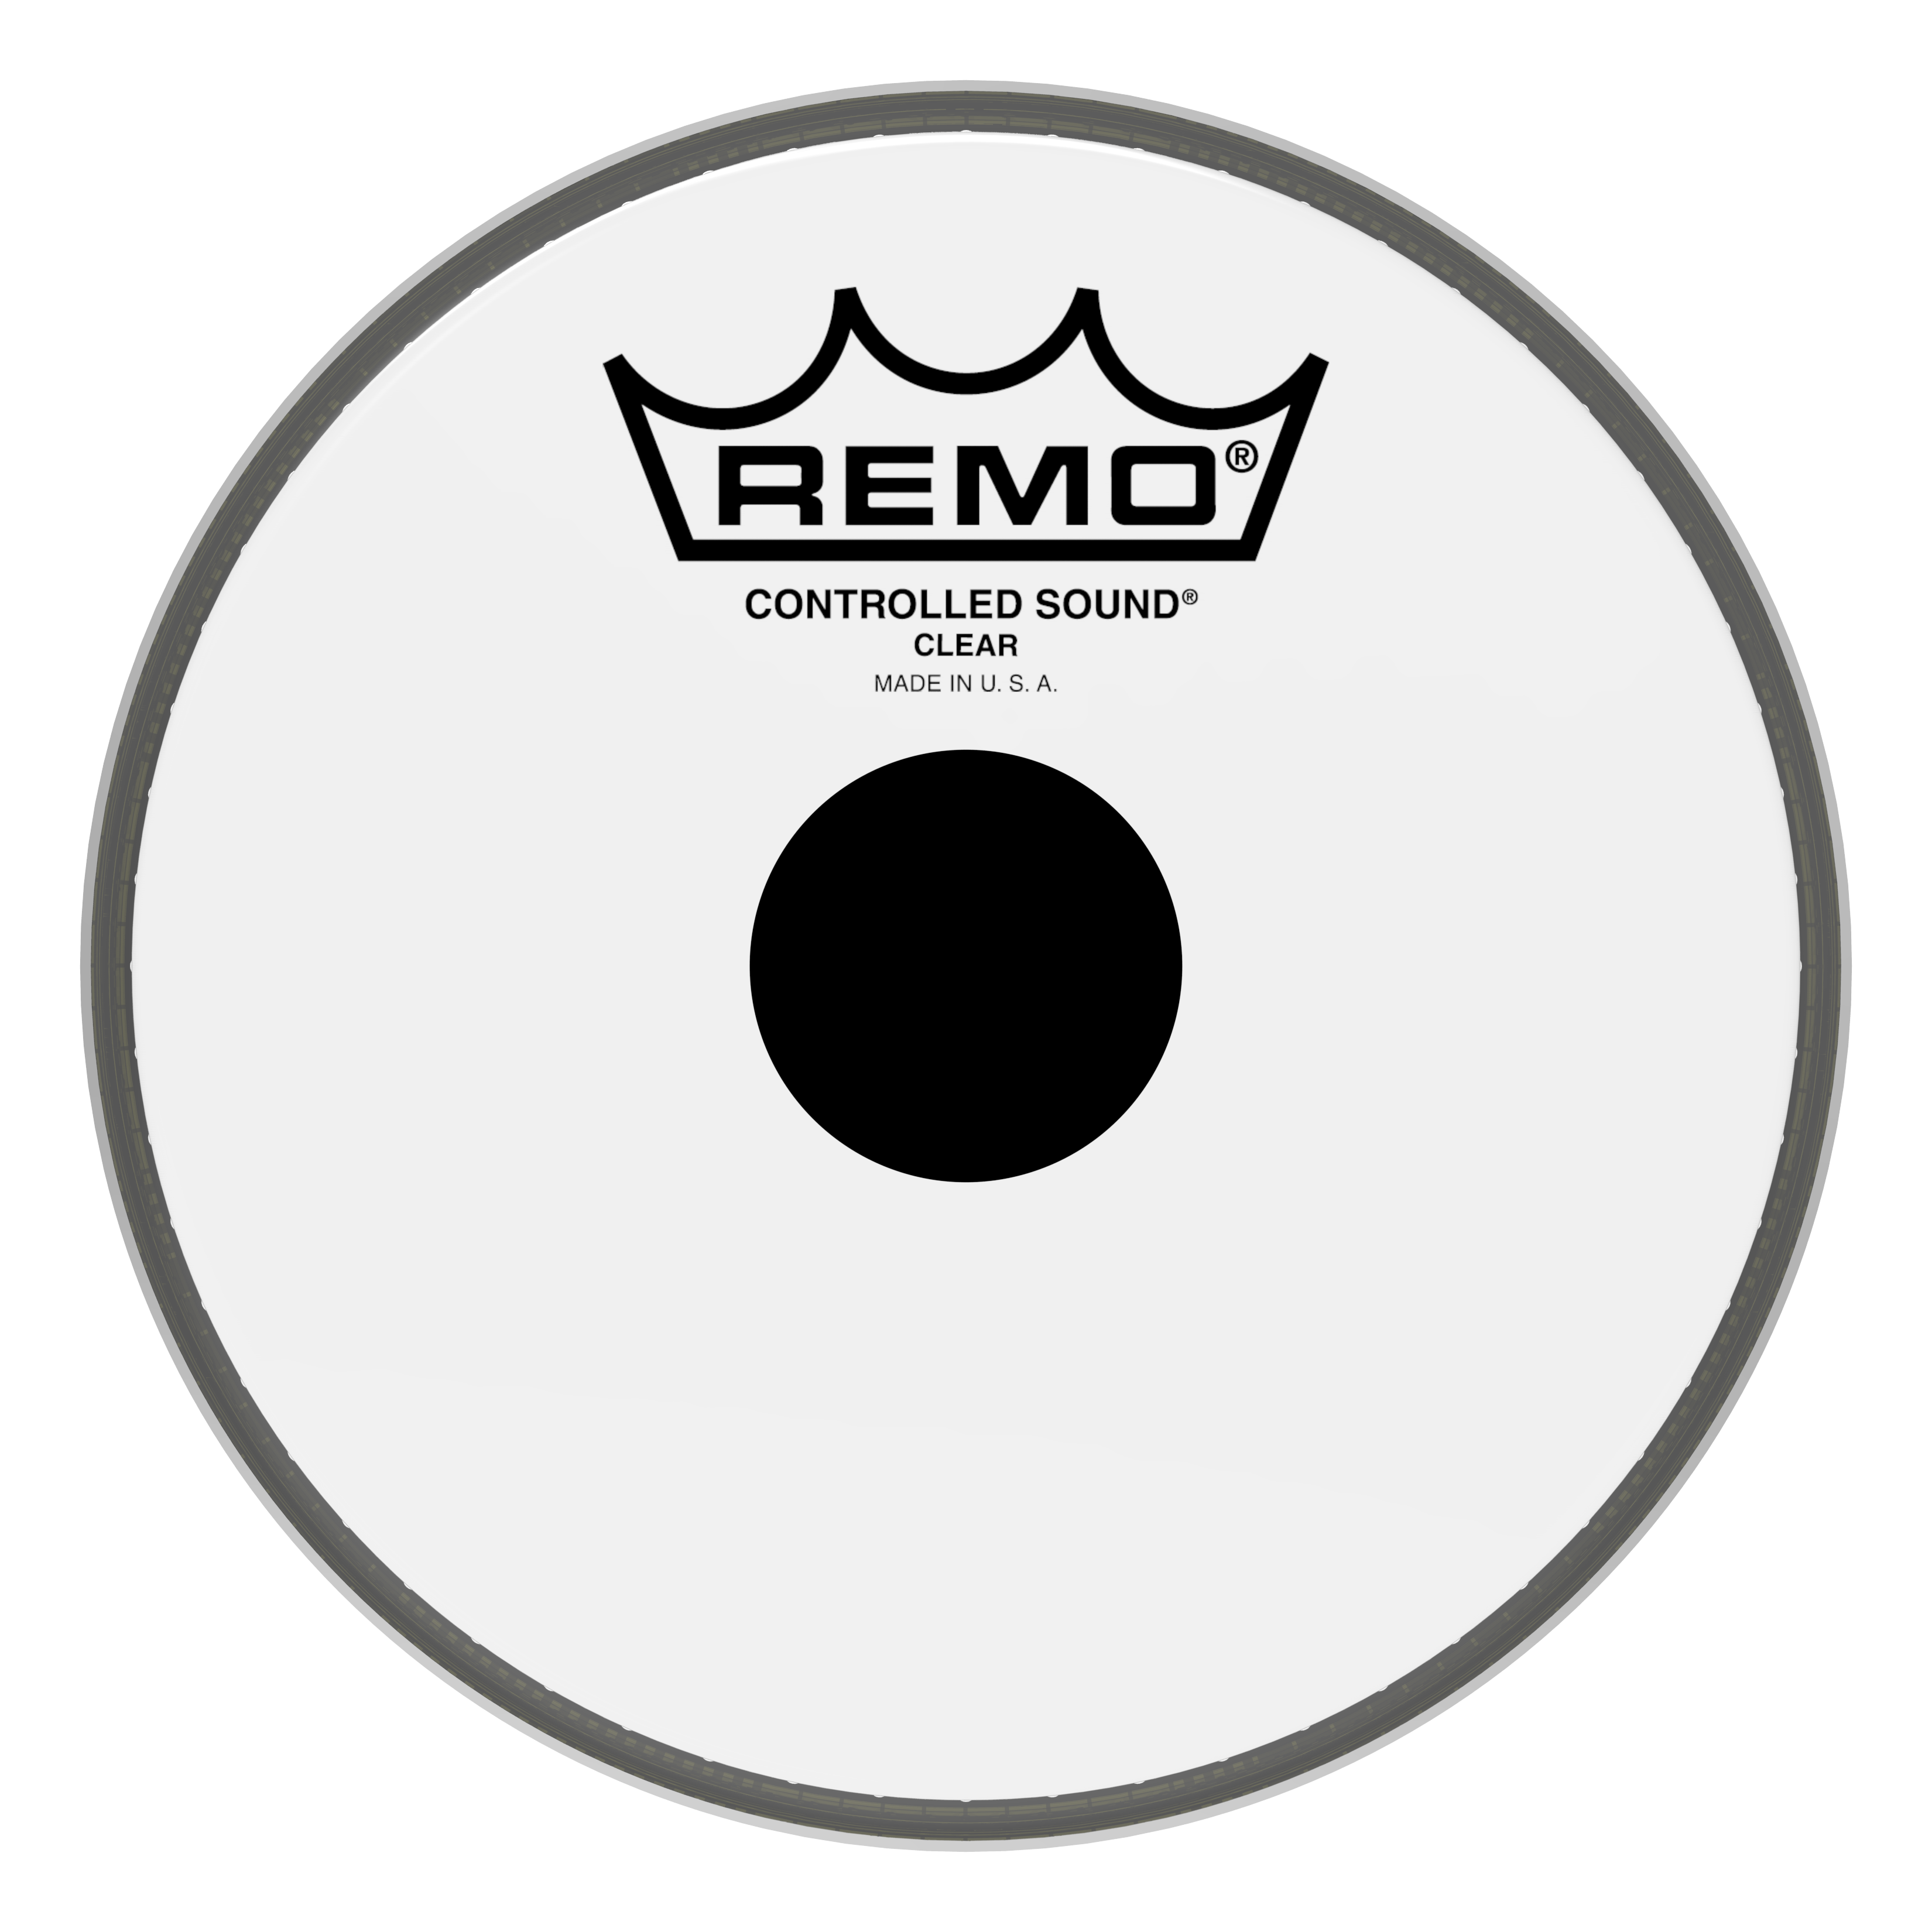 Remo - Parche Controlled Sound, Tamaño: 6" Color: Negro Transp Mod.CS-0306-10_2